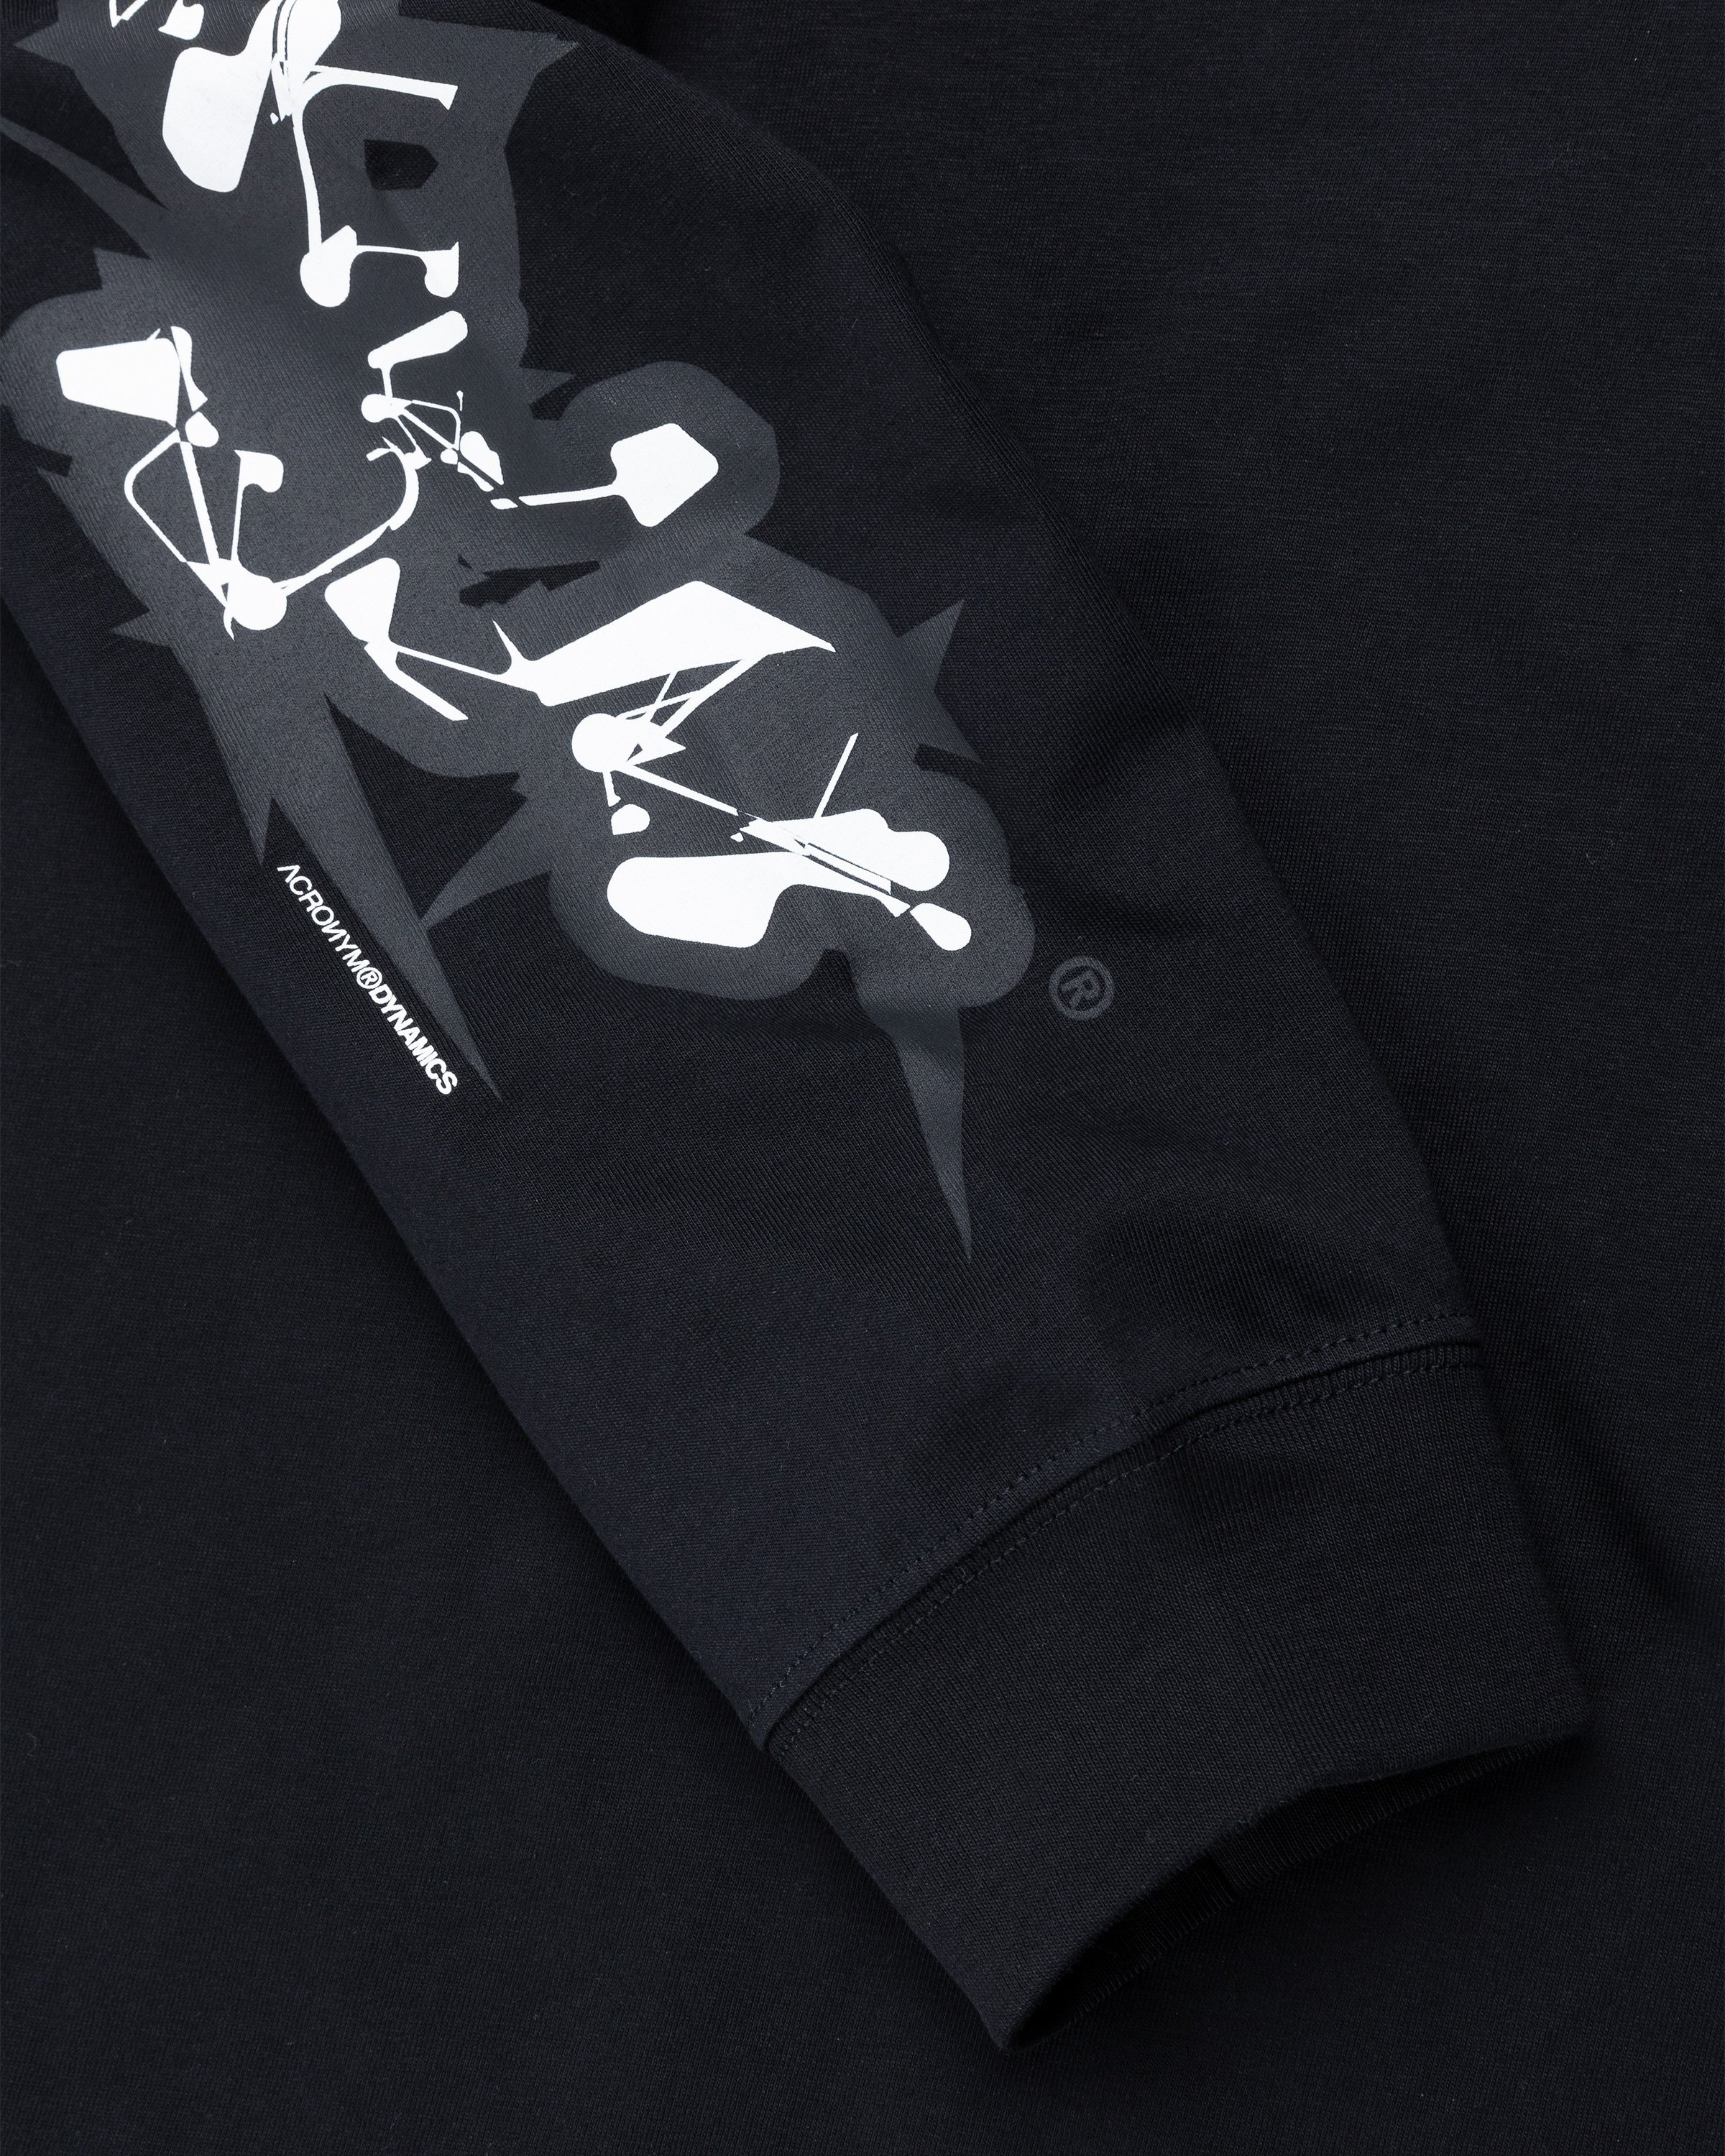 ACRONYM - S29-PR-A Organic Cotton Longsleeve T-Shirt Black - Clothing - Black - Image 6